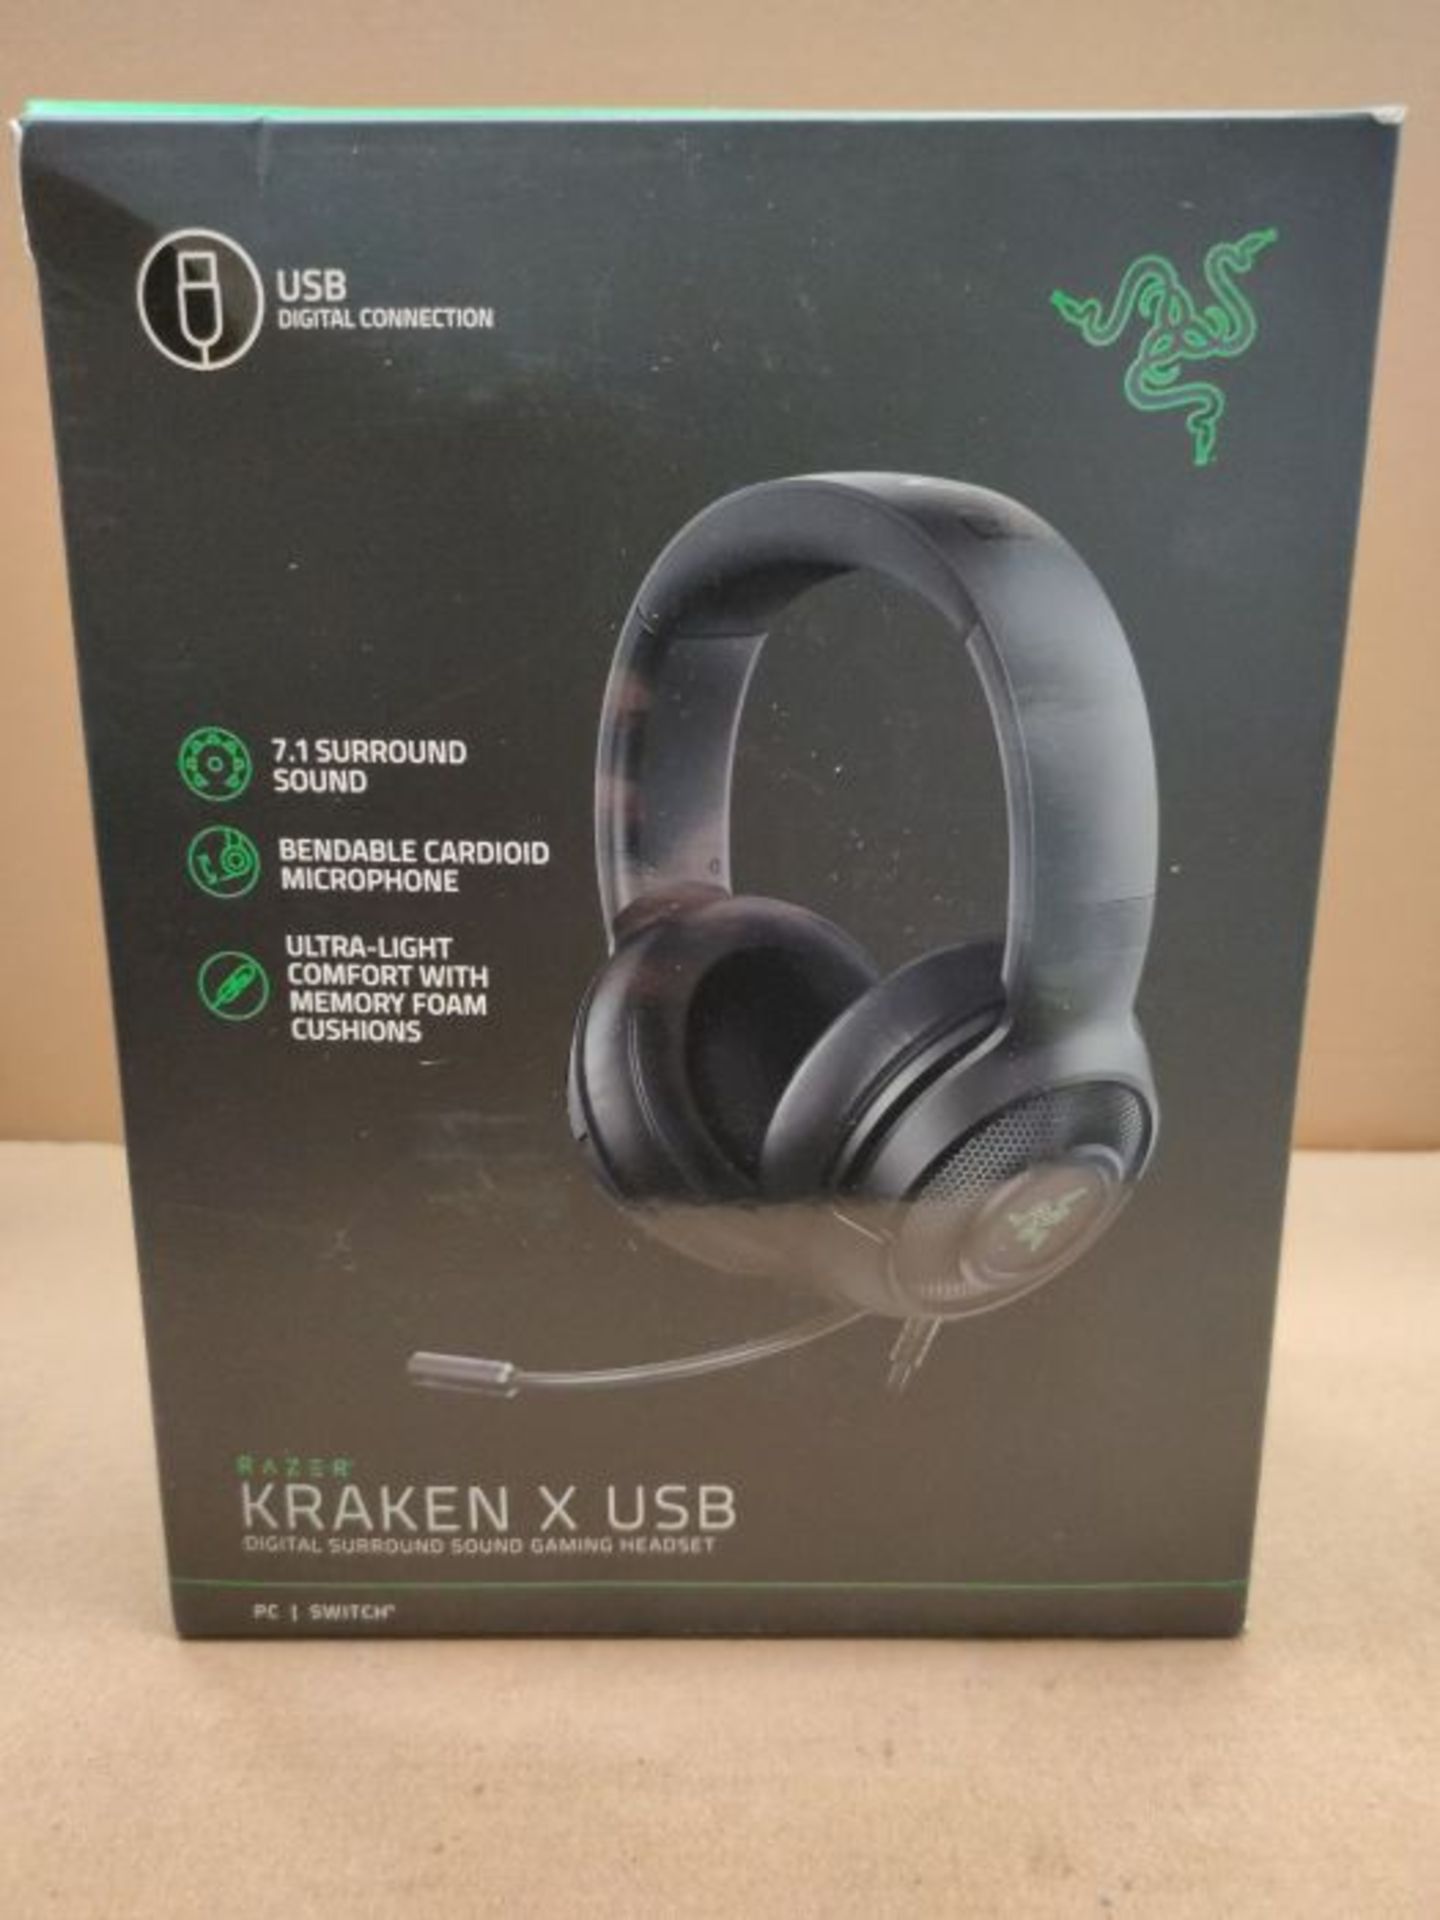 [CRACKED] Razer Kraken x USB - Digital Surround Sound Gaming USB-Headset - Image 2 of 3